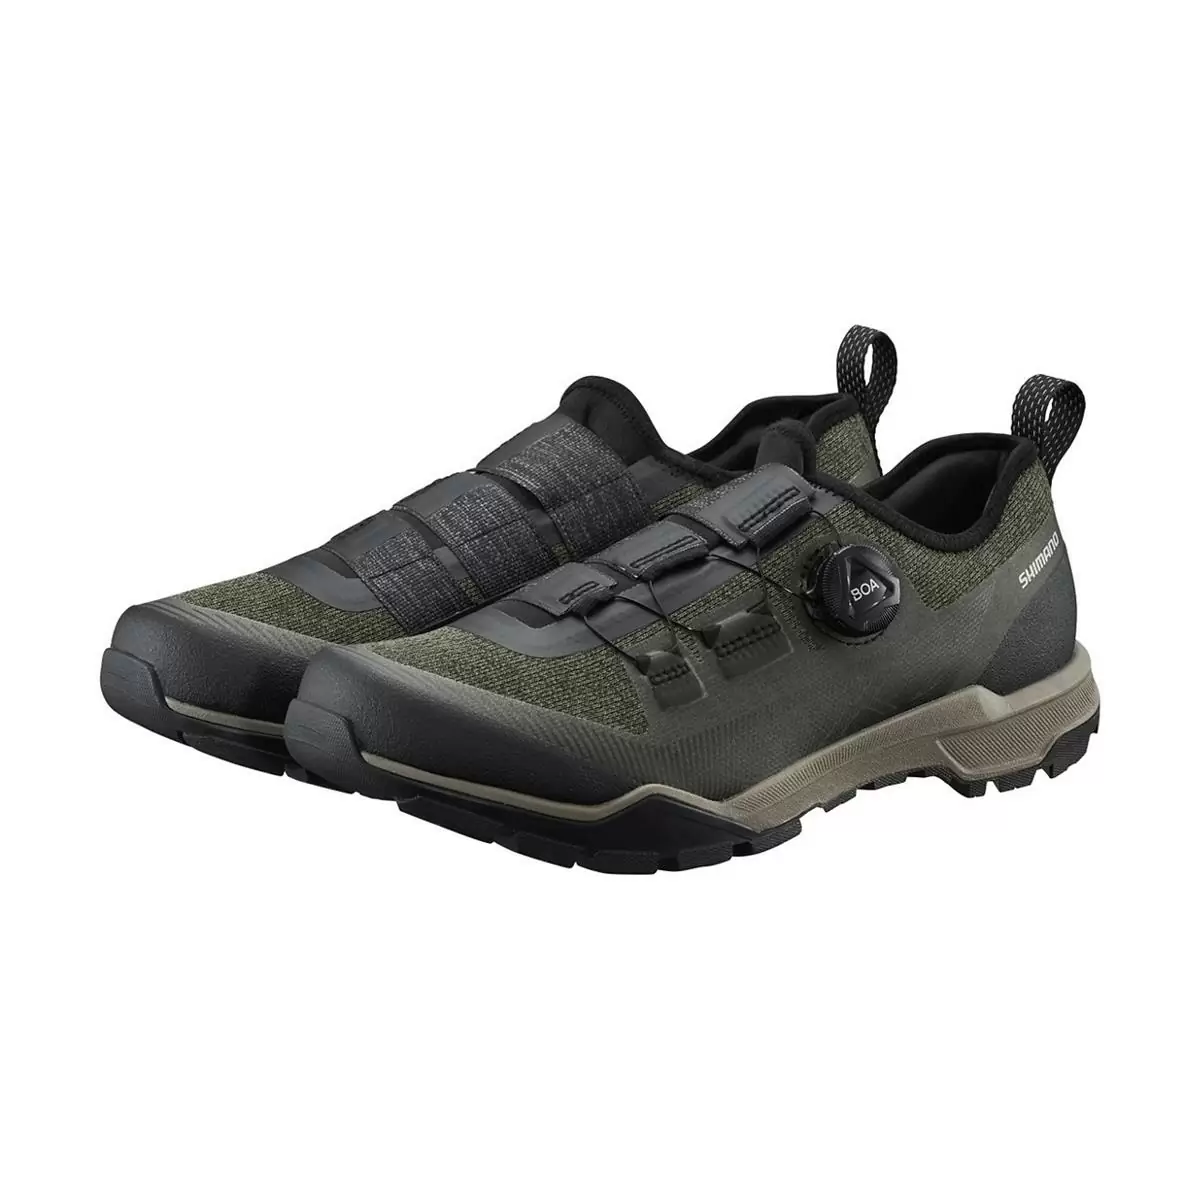 Trekking / MTB Shoes SH-EX700 Green Size 43 #4